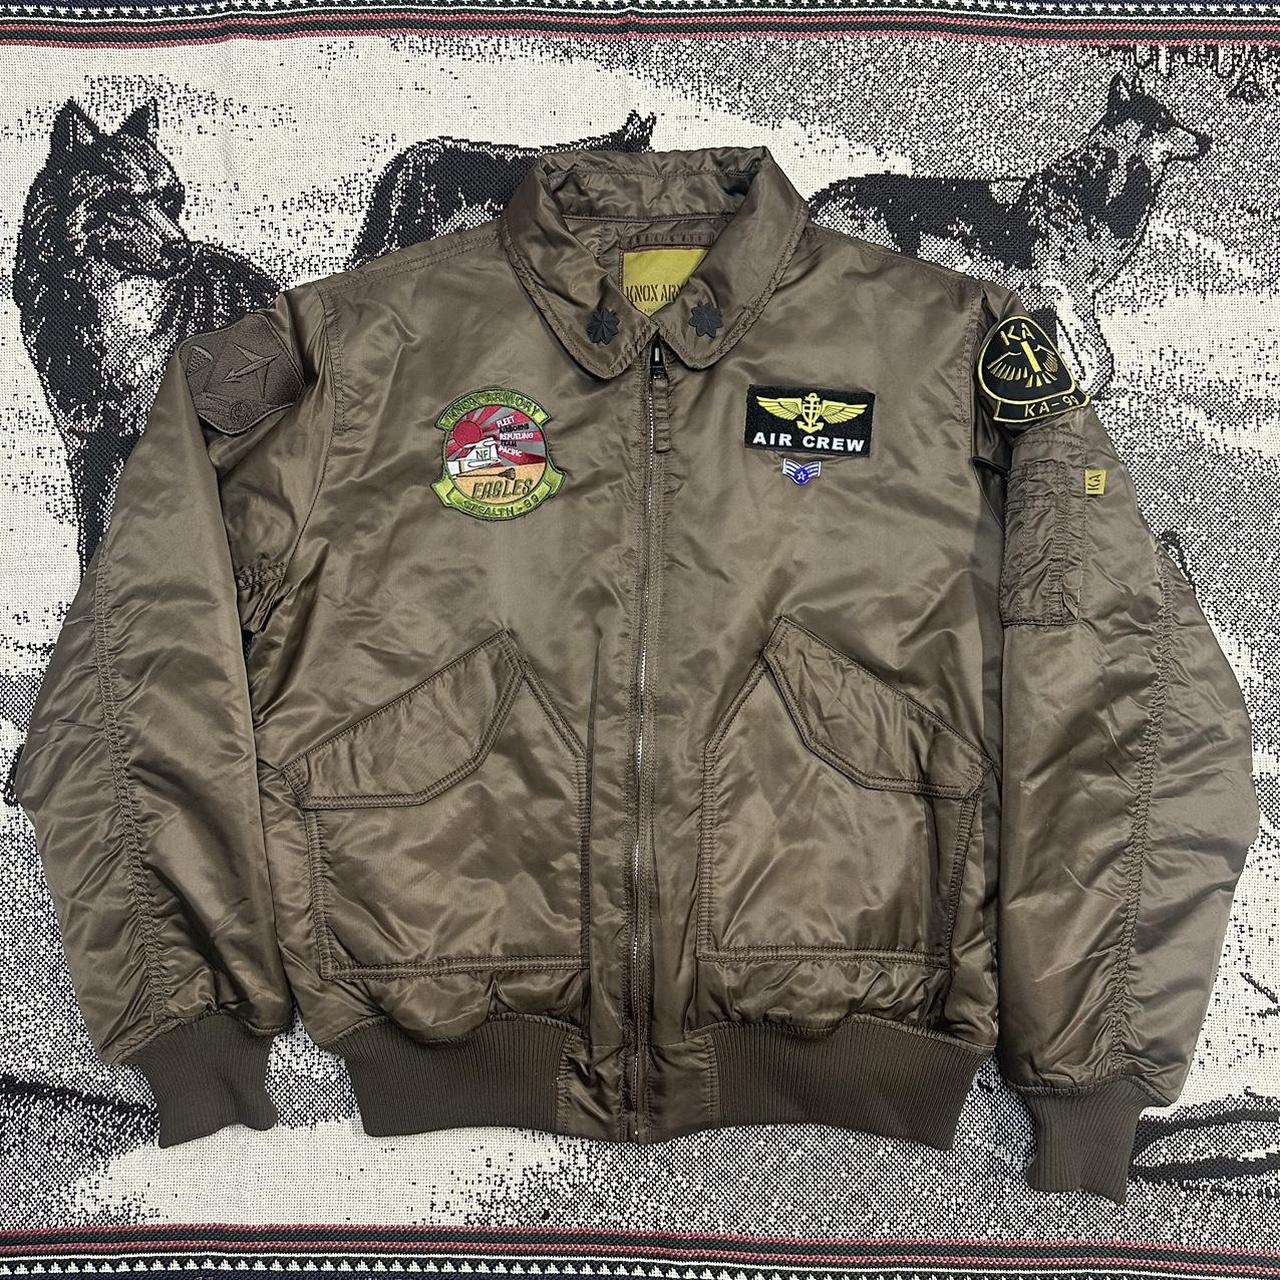 Men's Bomber Flight Jacket w/ Patches 